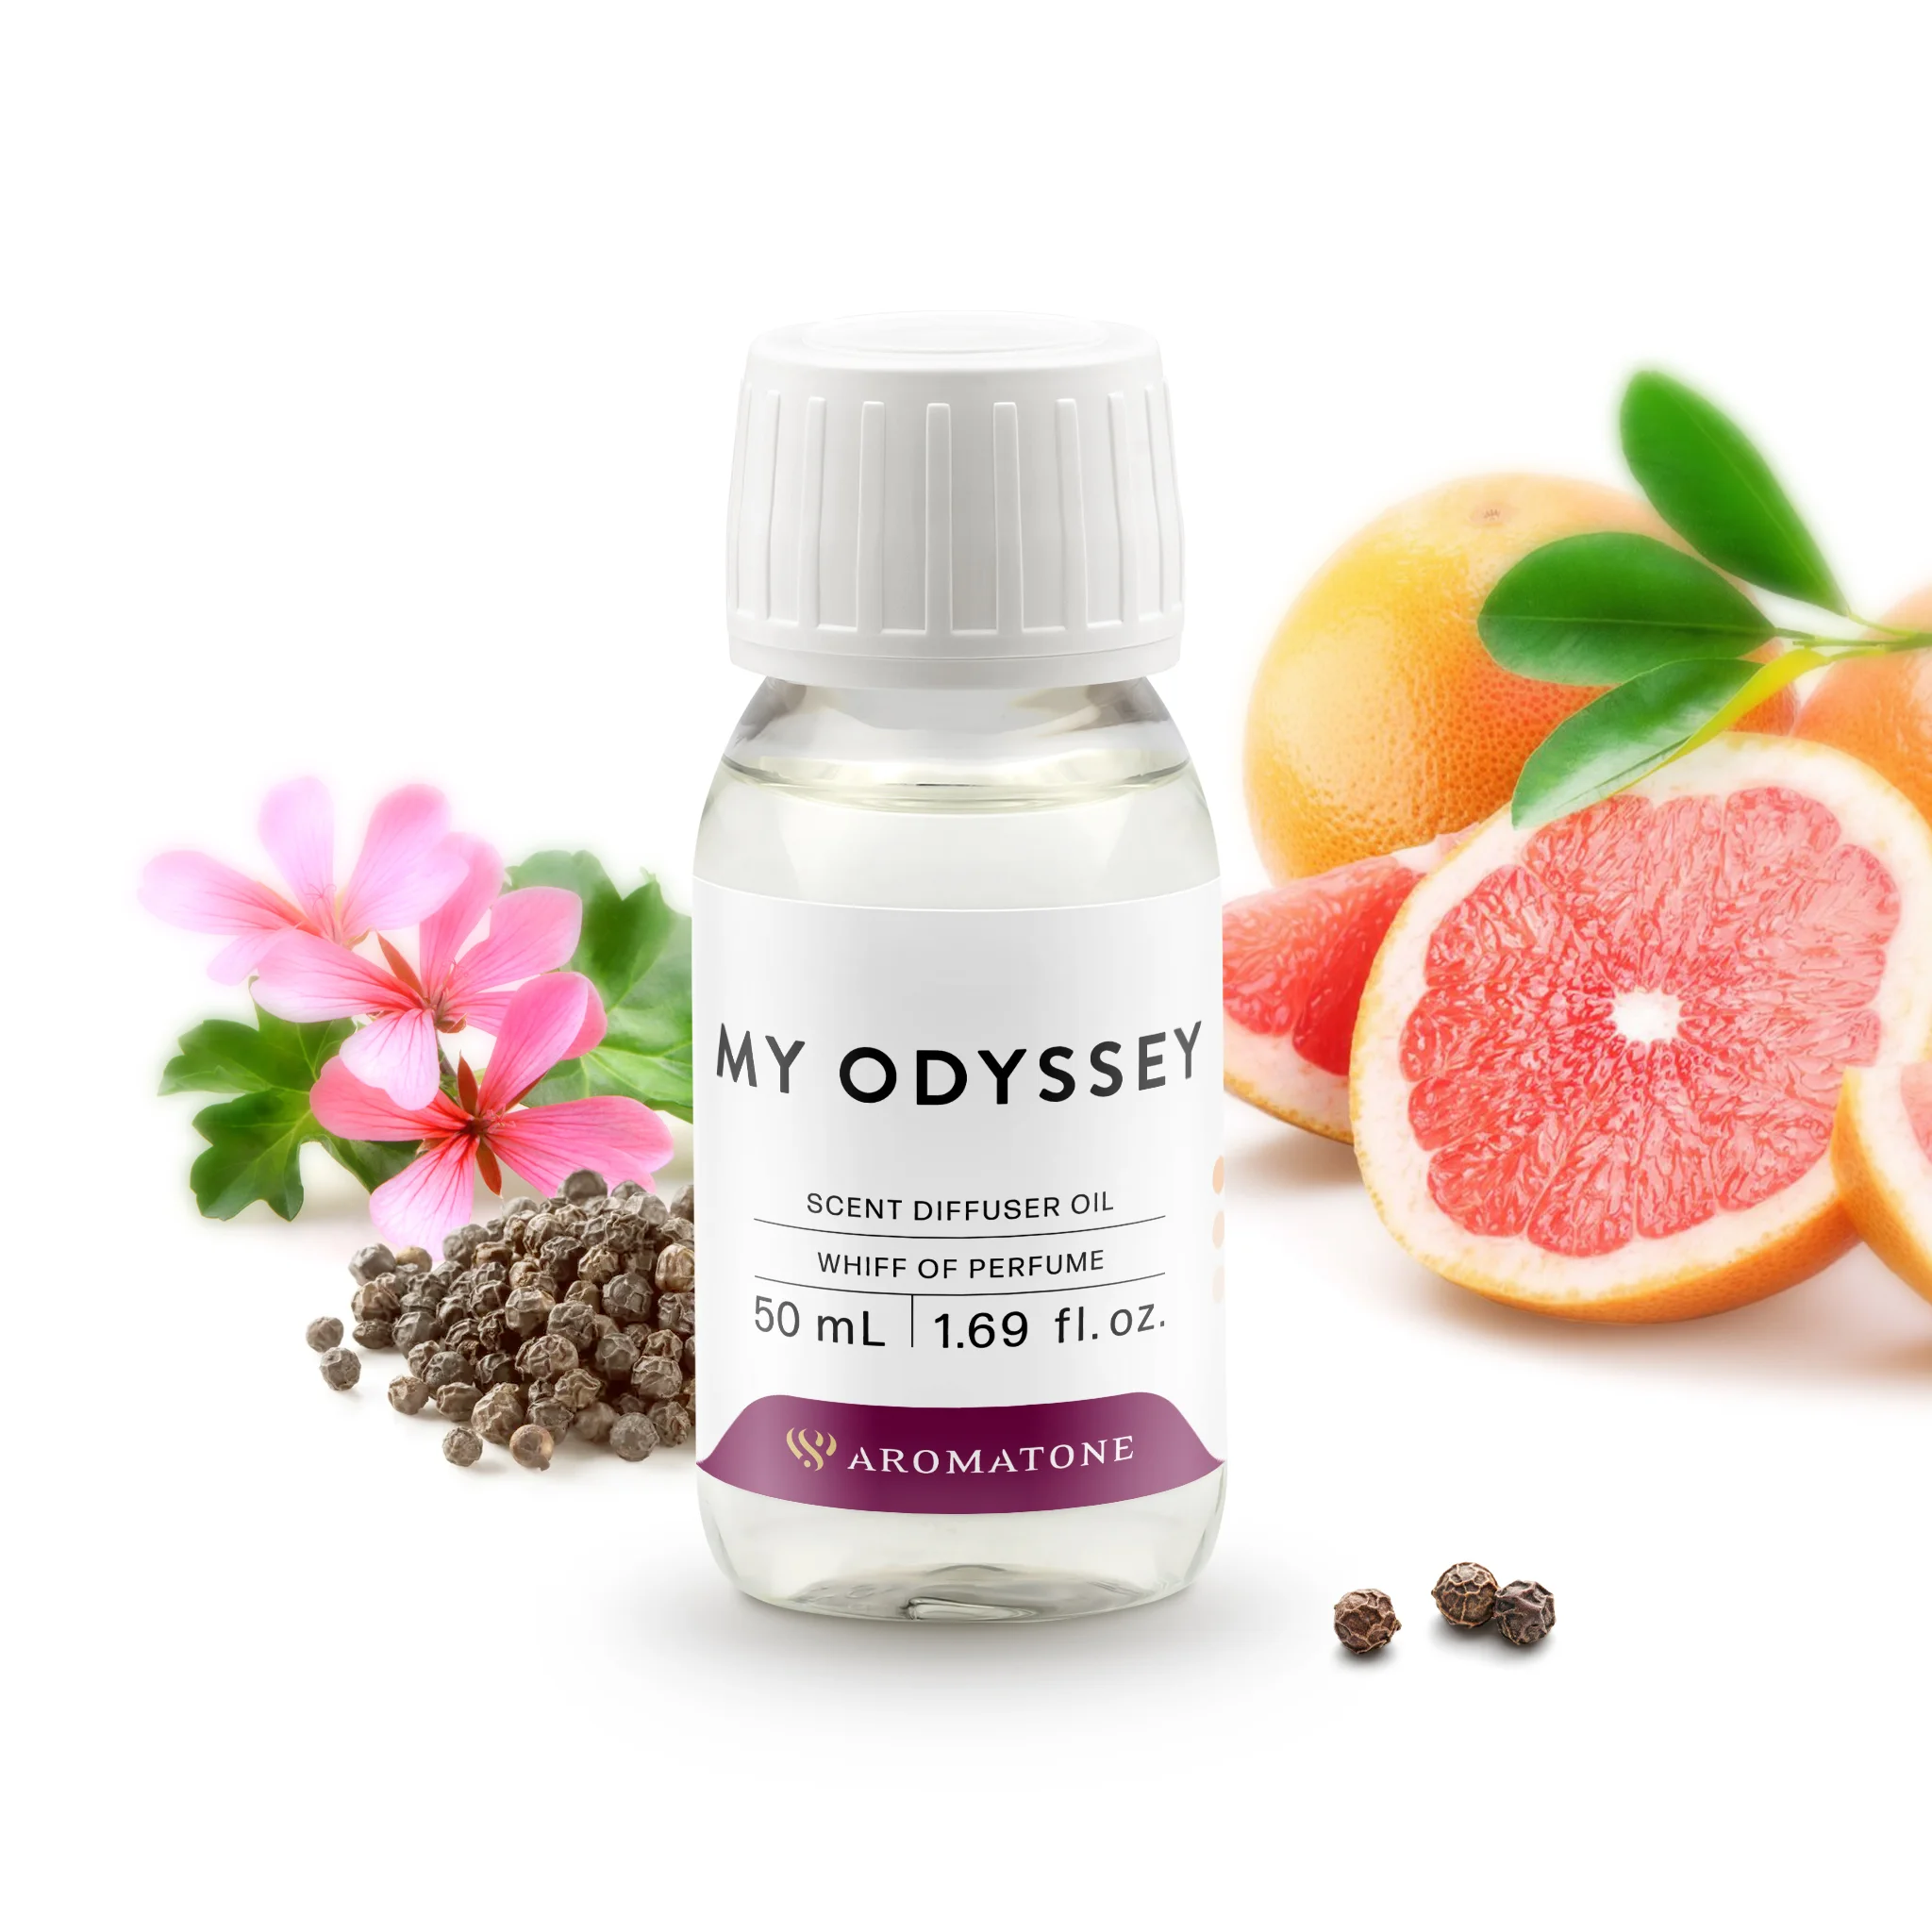 My Odyssey perfume oil